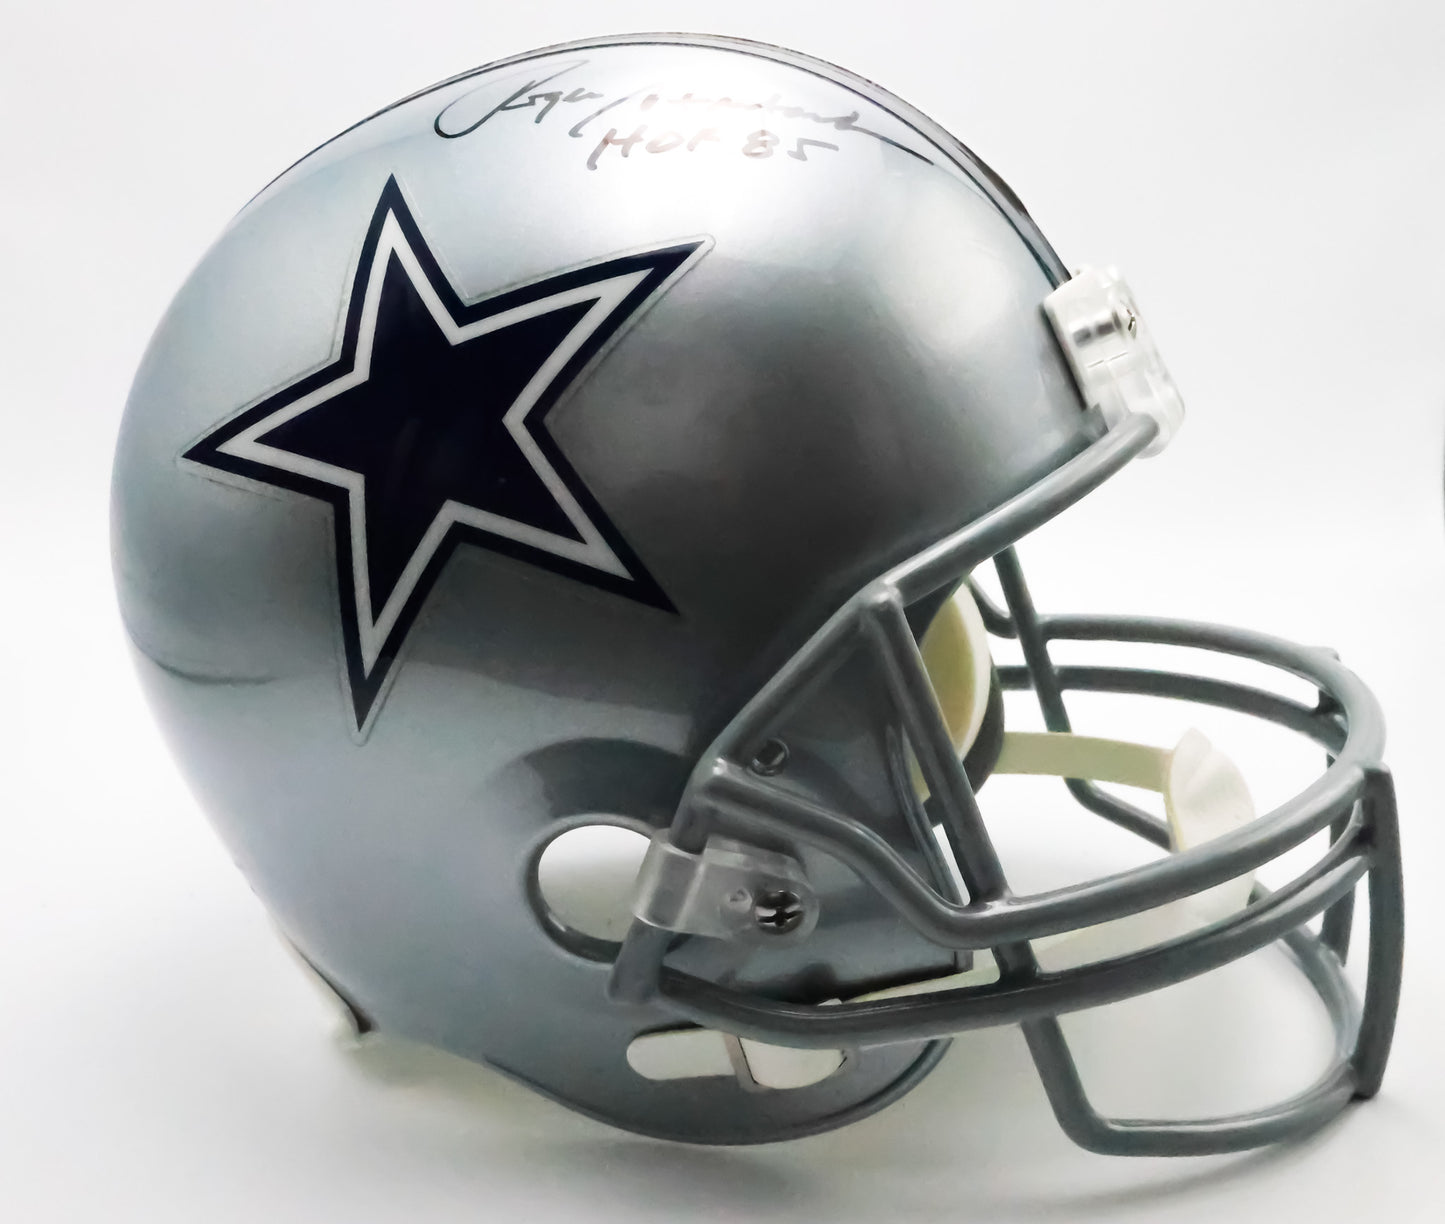 Roger Staubach autographed Cowboys Replica Helmet  Inscribed "HOF 85"